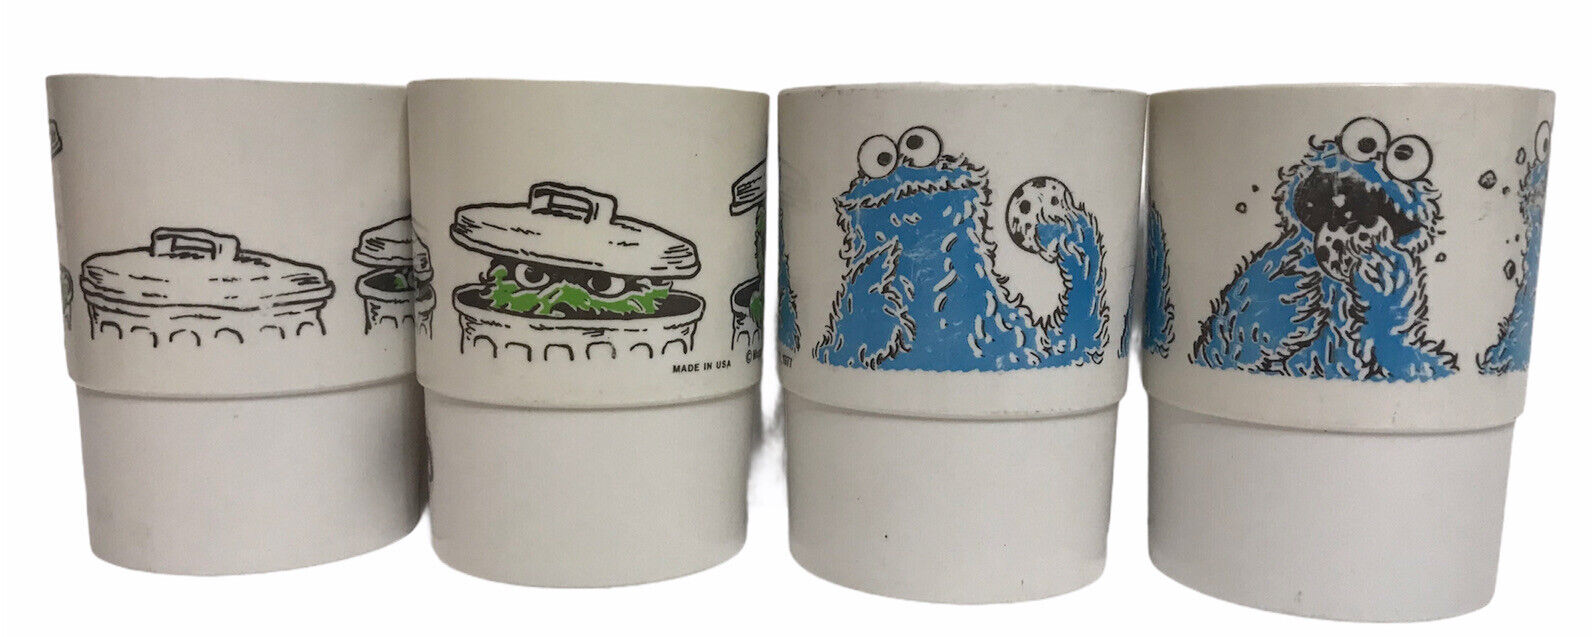 1977 Muppets Sesame Street Stackable Plastic Cups Set Of 4 VINTAGE NOS NEW